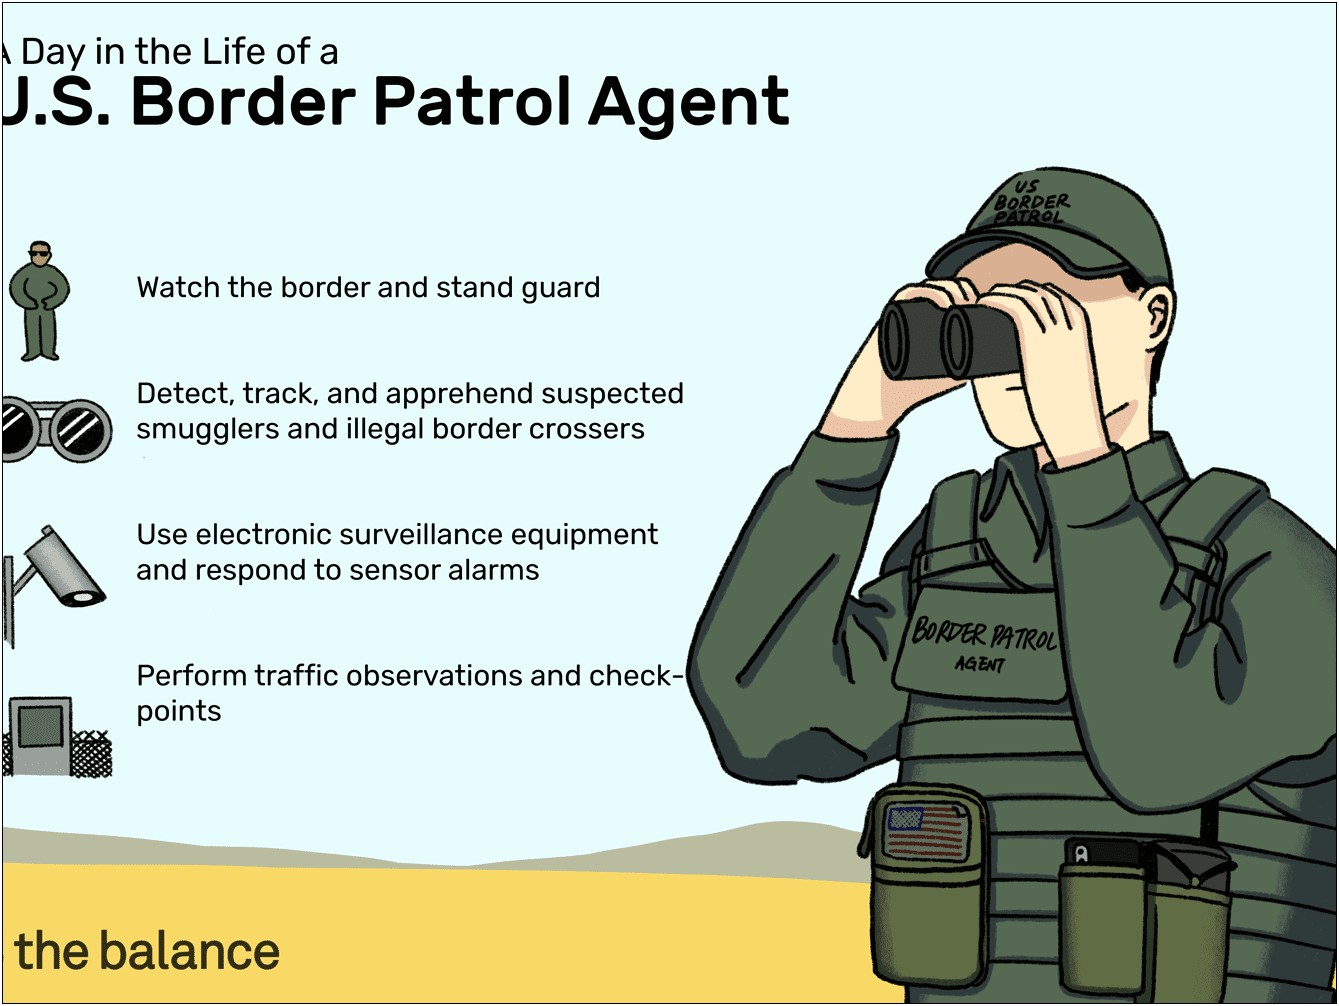 Border Patrol Agent Resume Objective